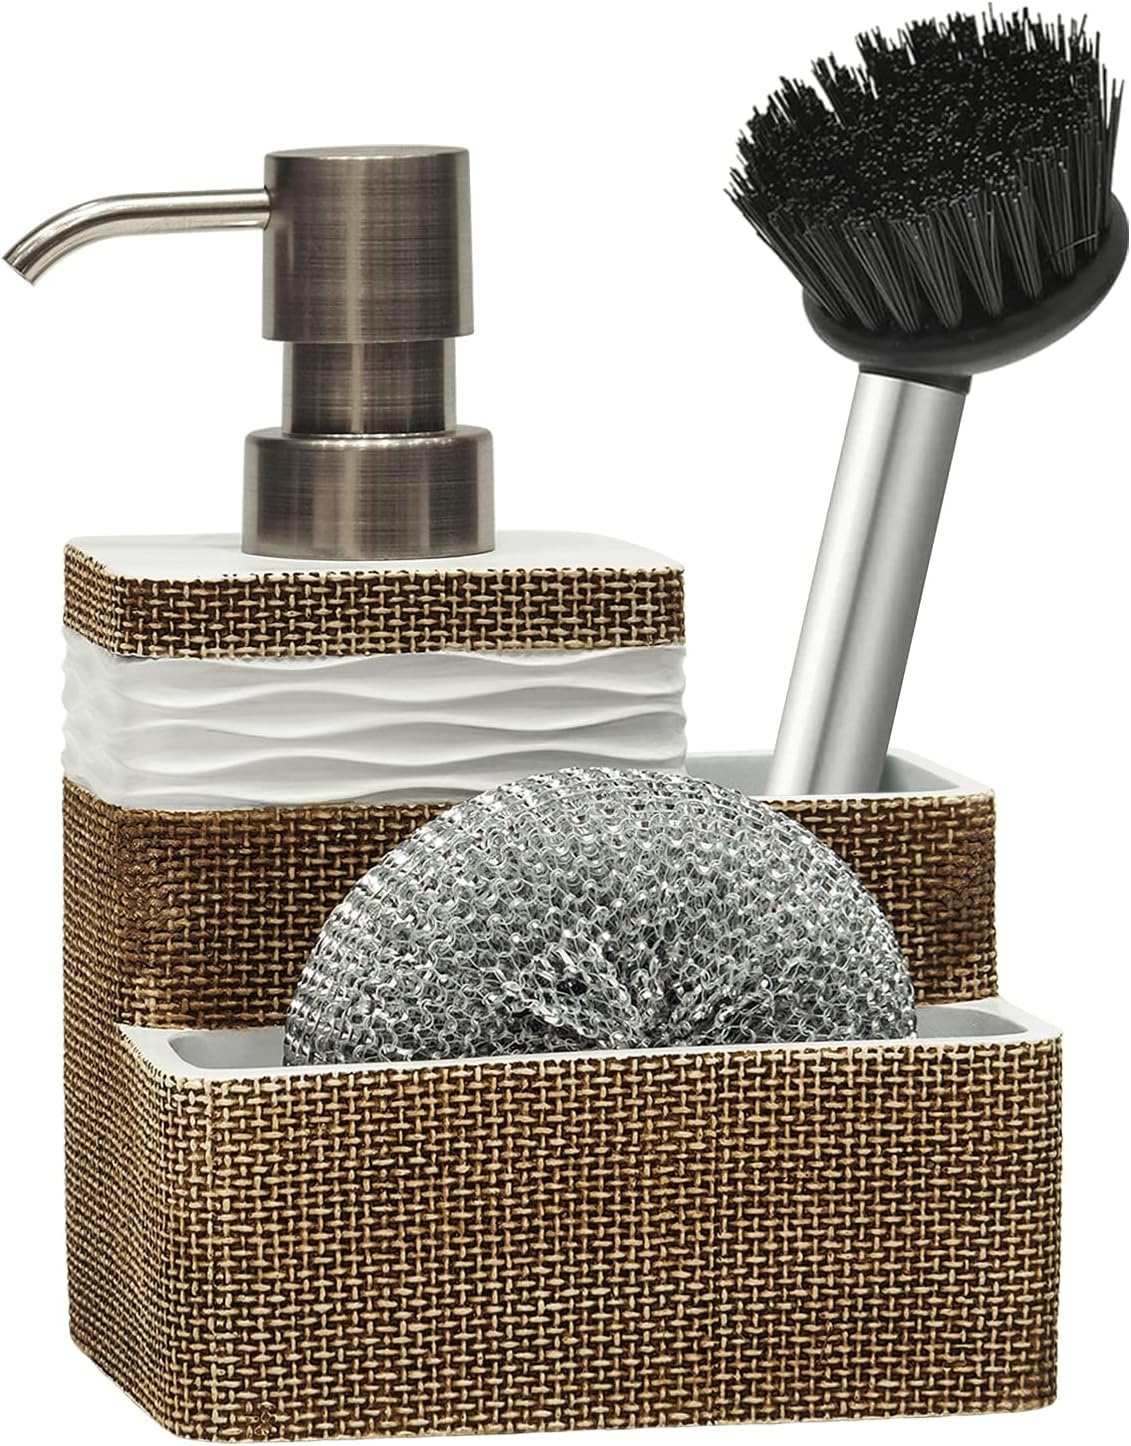 Kitchen dish soap dispenser with sponge Holder & Brush holder for Sink organize eco-friendly resin hand soap sponge dispenser 3 in 1 hold 11oz liquid dish soap, scrubber for bathroom-Brown & White